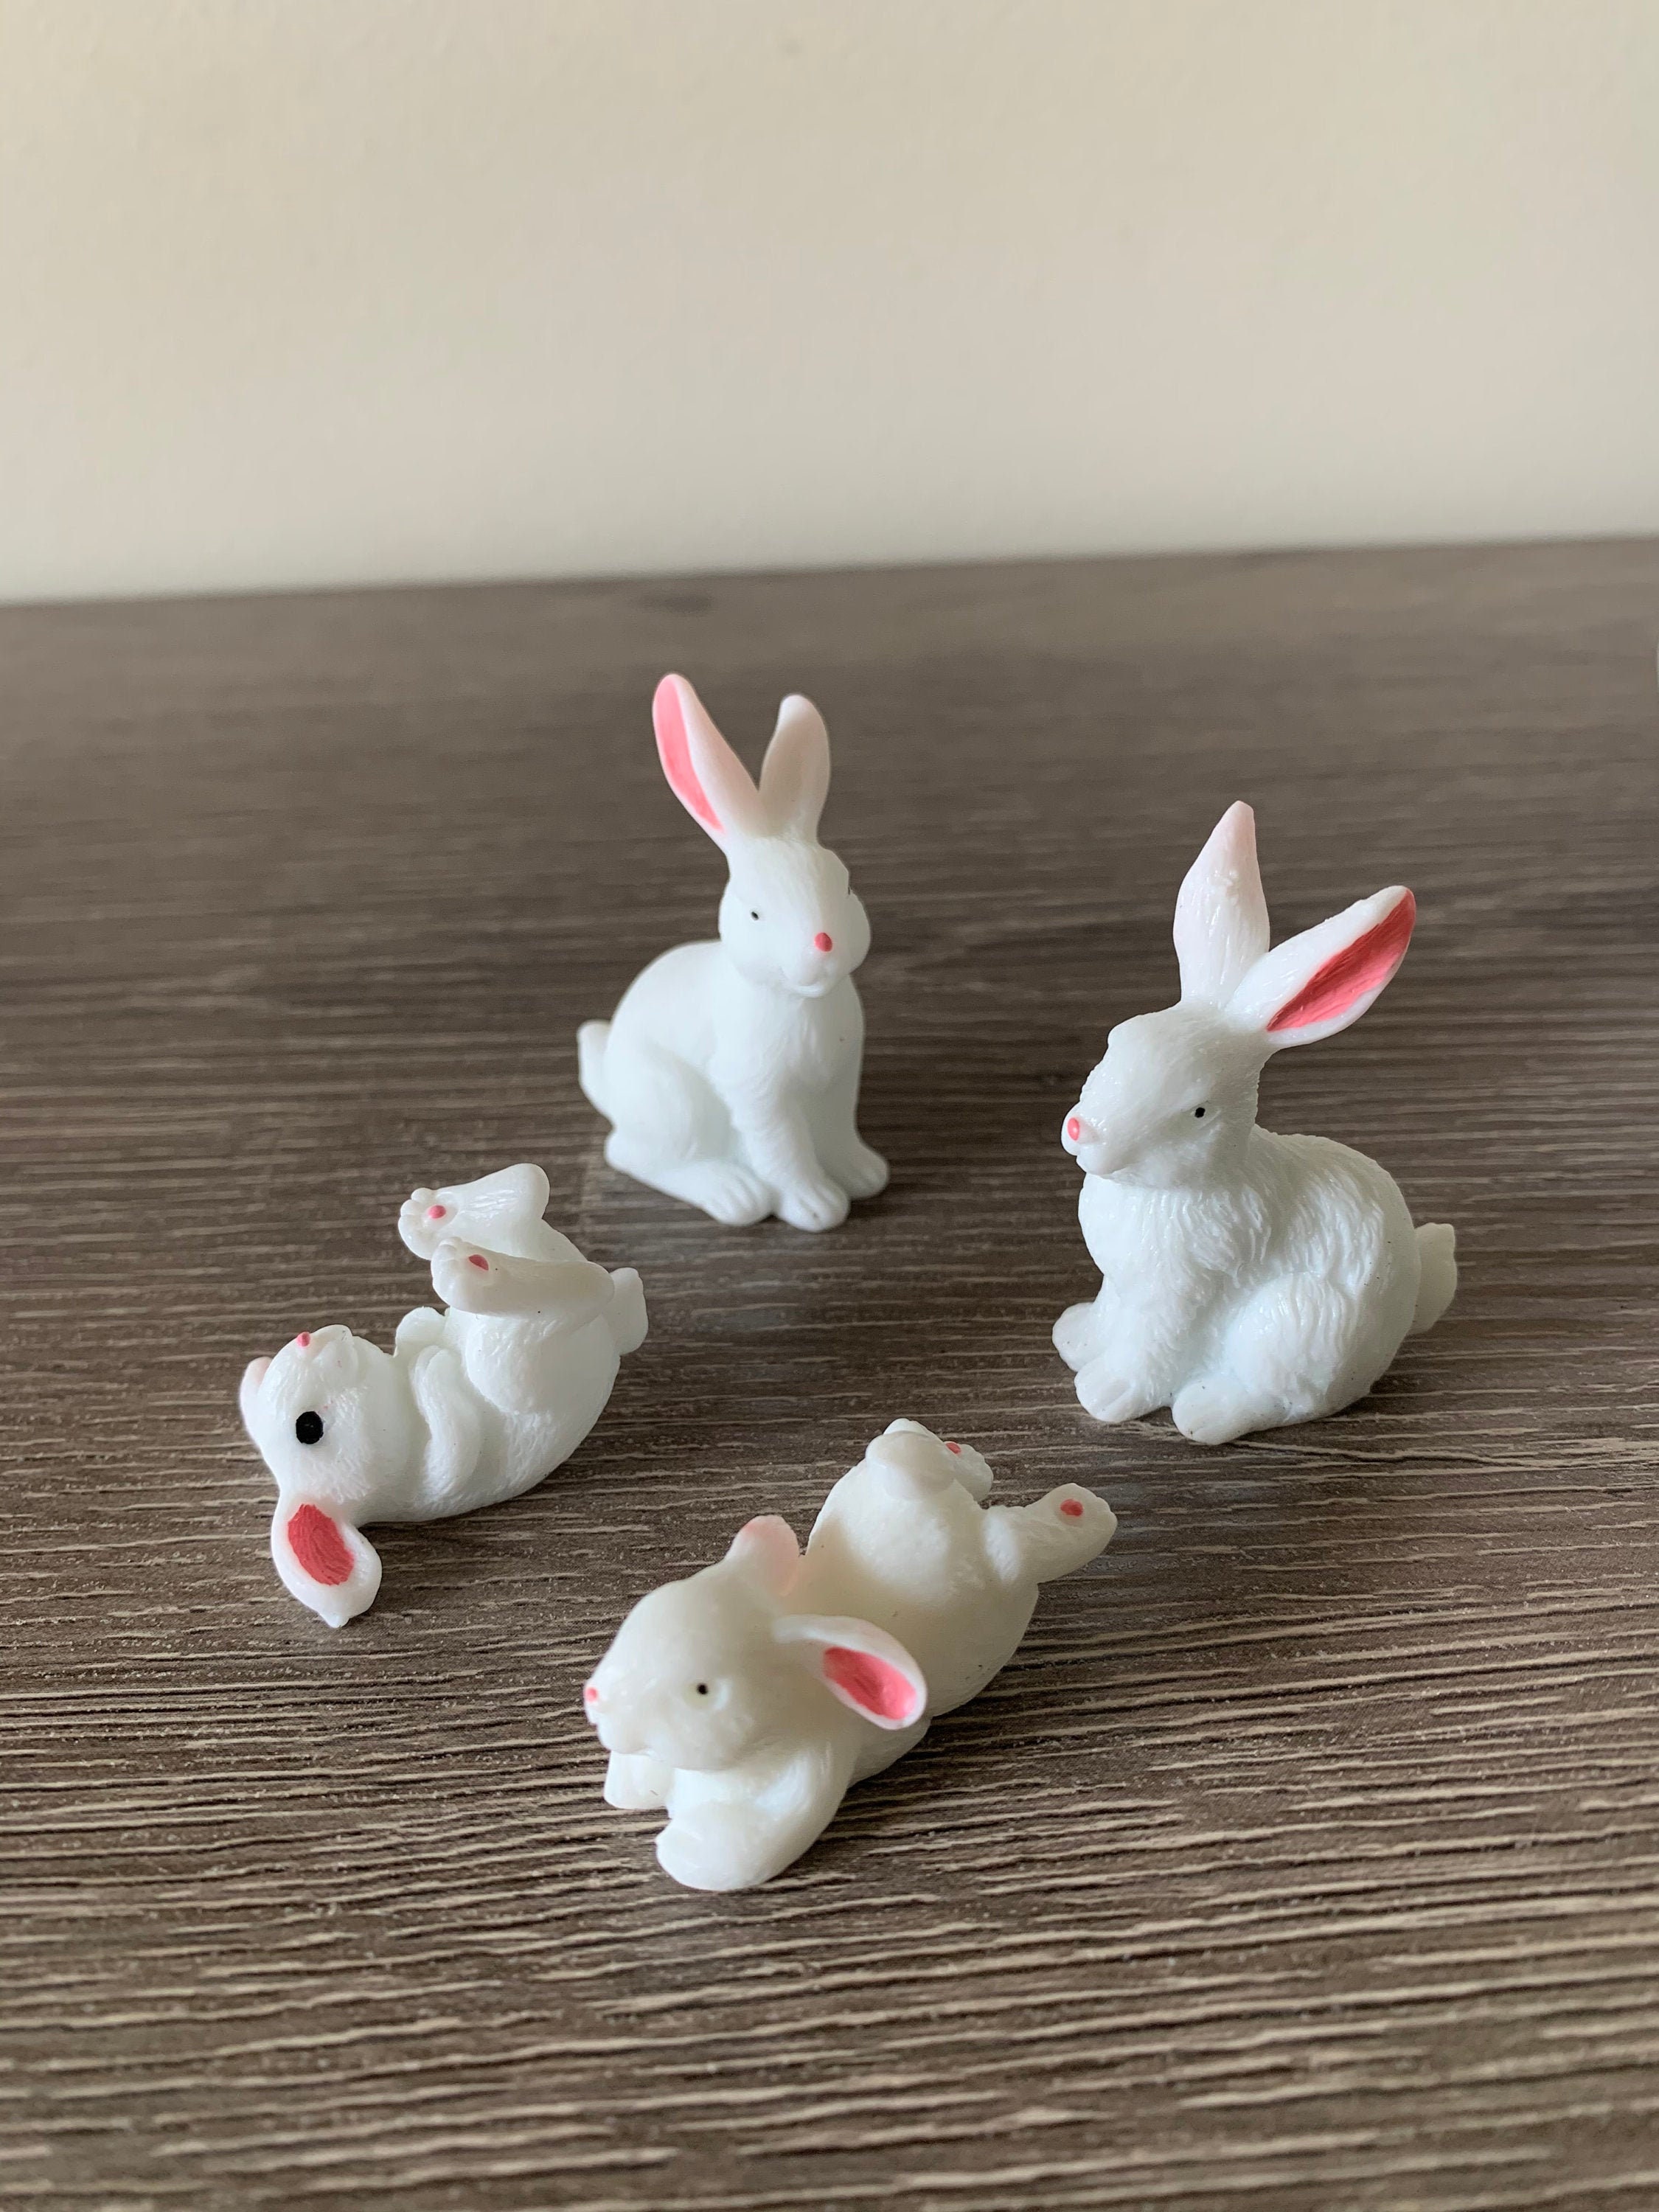 tyoungg 24 Pieces Fairy Garden Easter Rabbit Miniature Animal Figures 1.5 1.1 Inch 24 Rabbits 